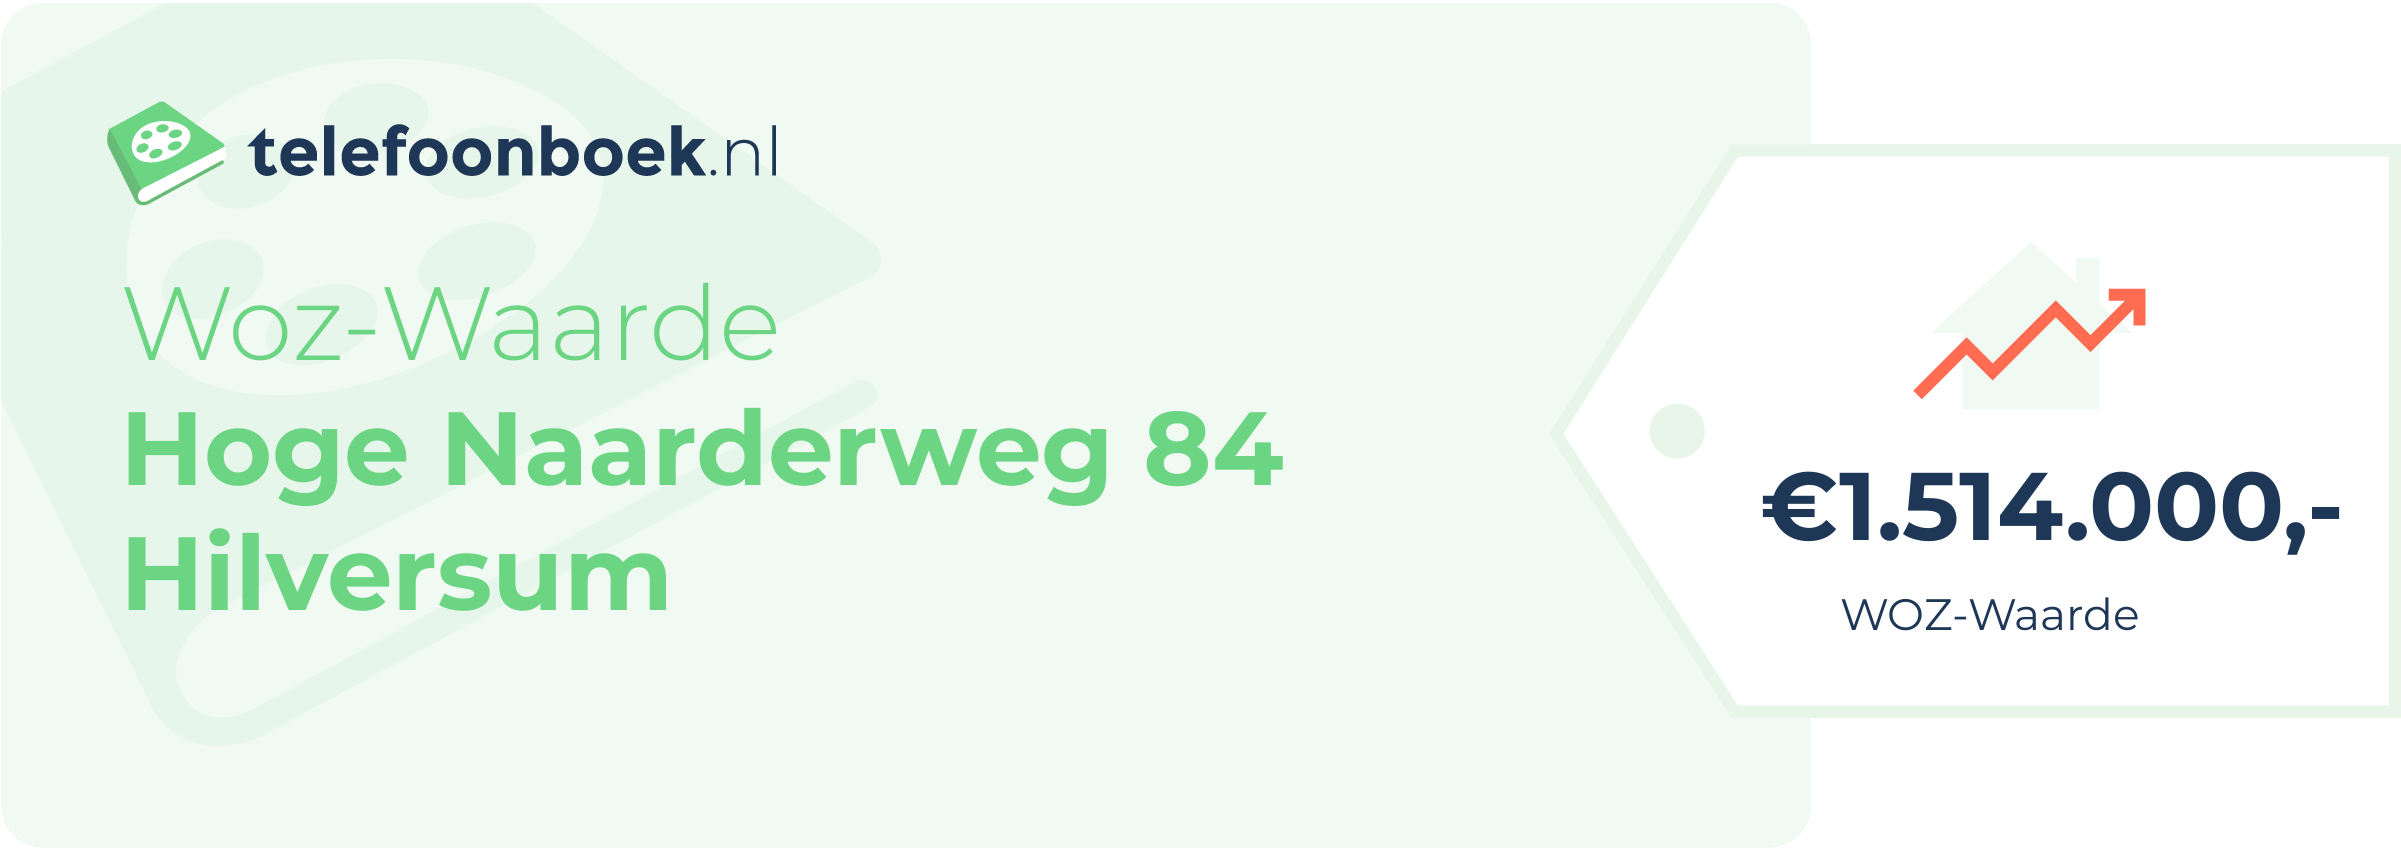 WOZ-waarde Hoge Naarderweg 84 Hilversum